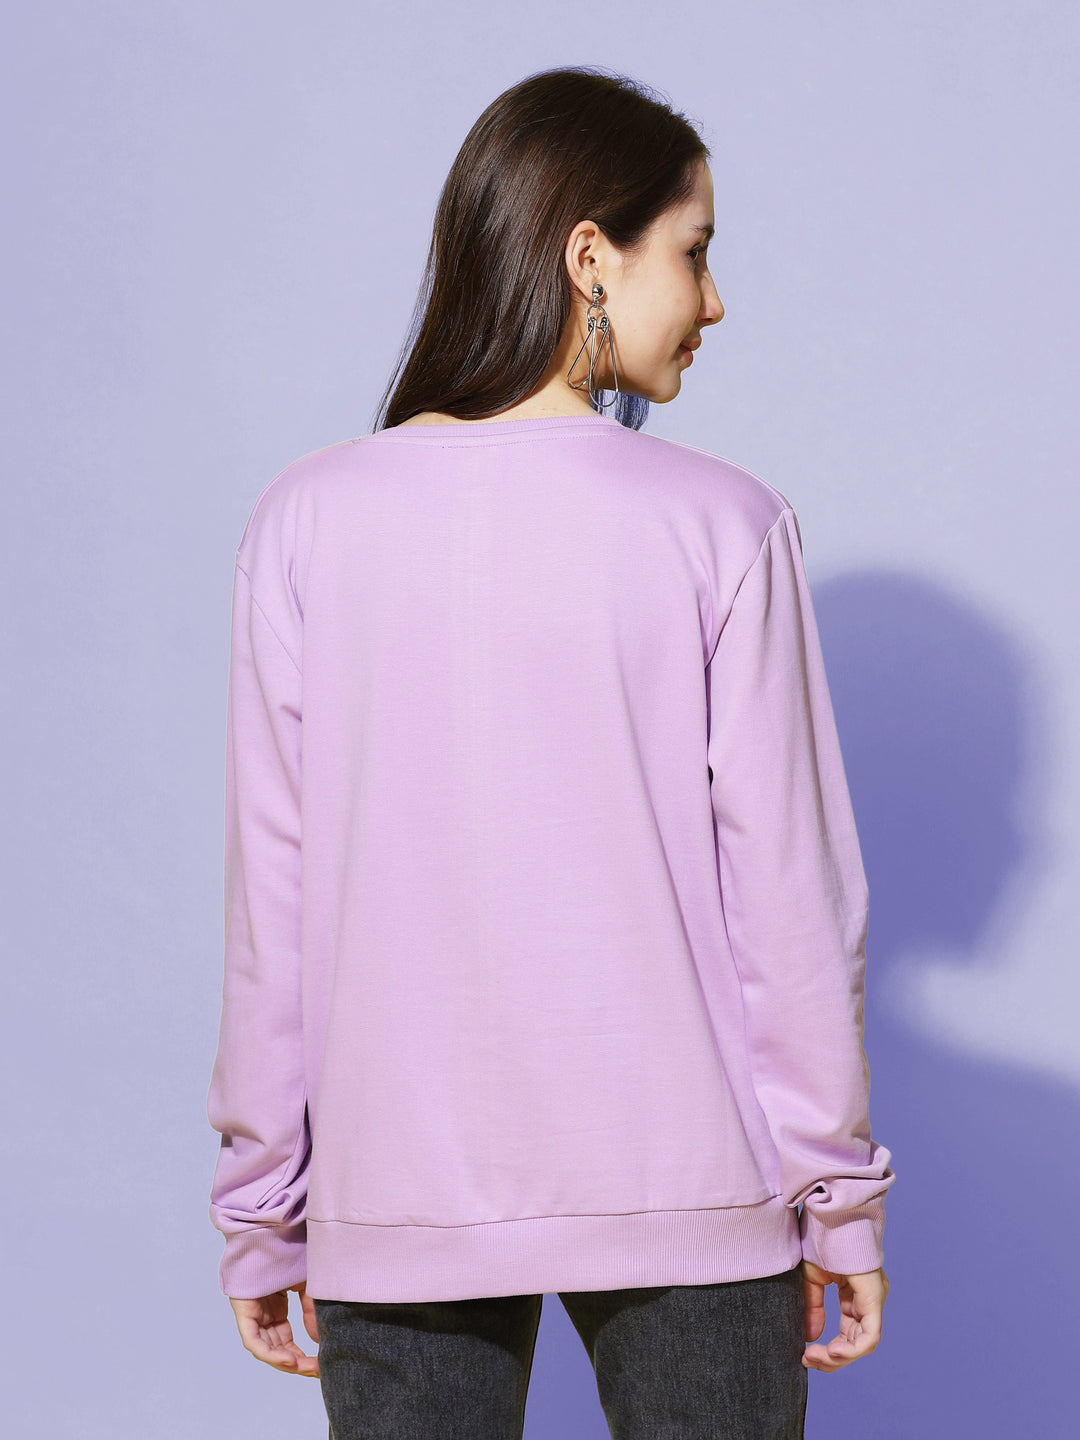  Sweatshirt  Lavender Loveliness: Explore Our Women's Solid Sweatshirt Collection- 9shines label 